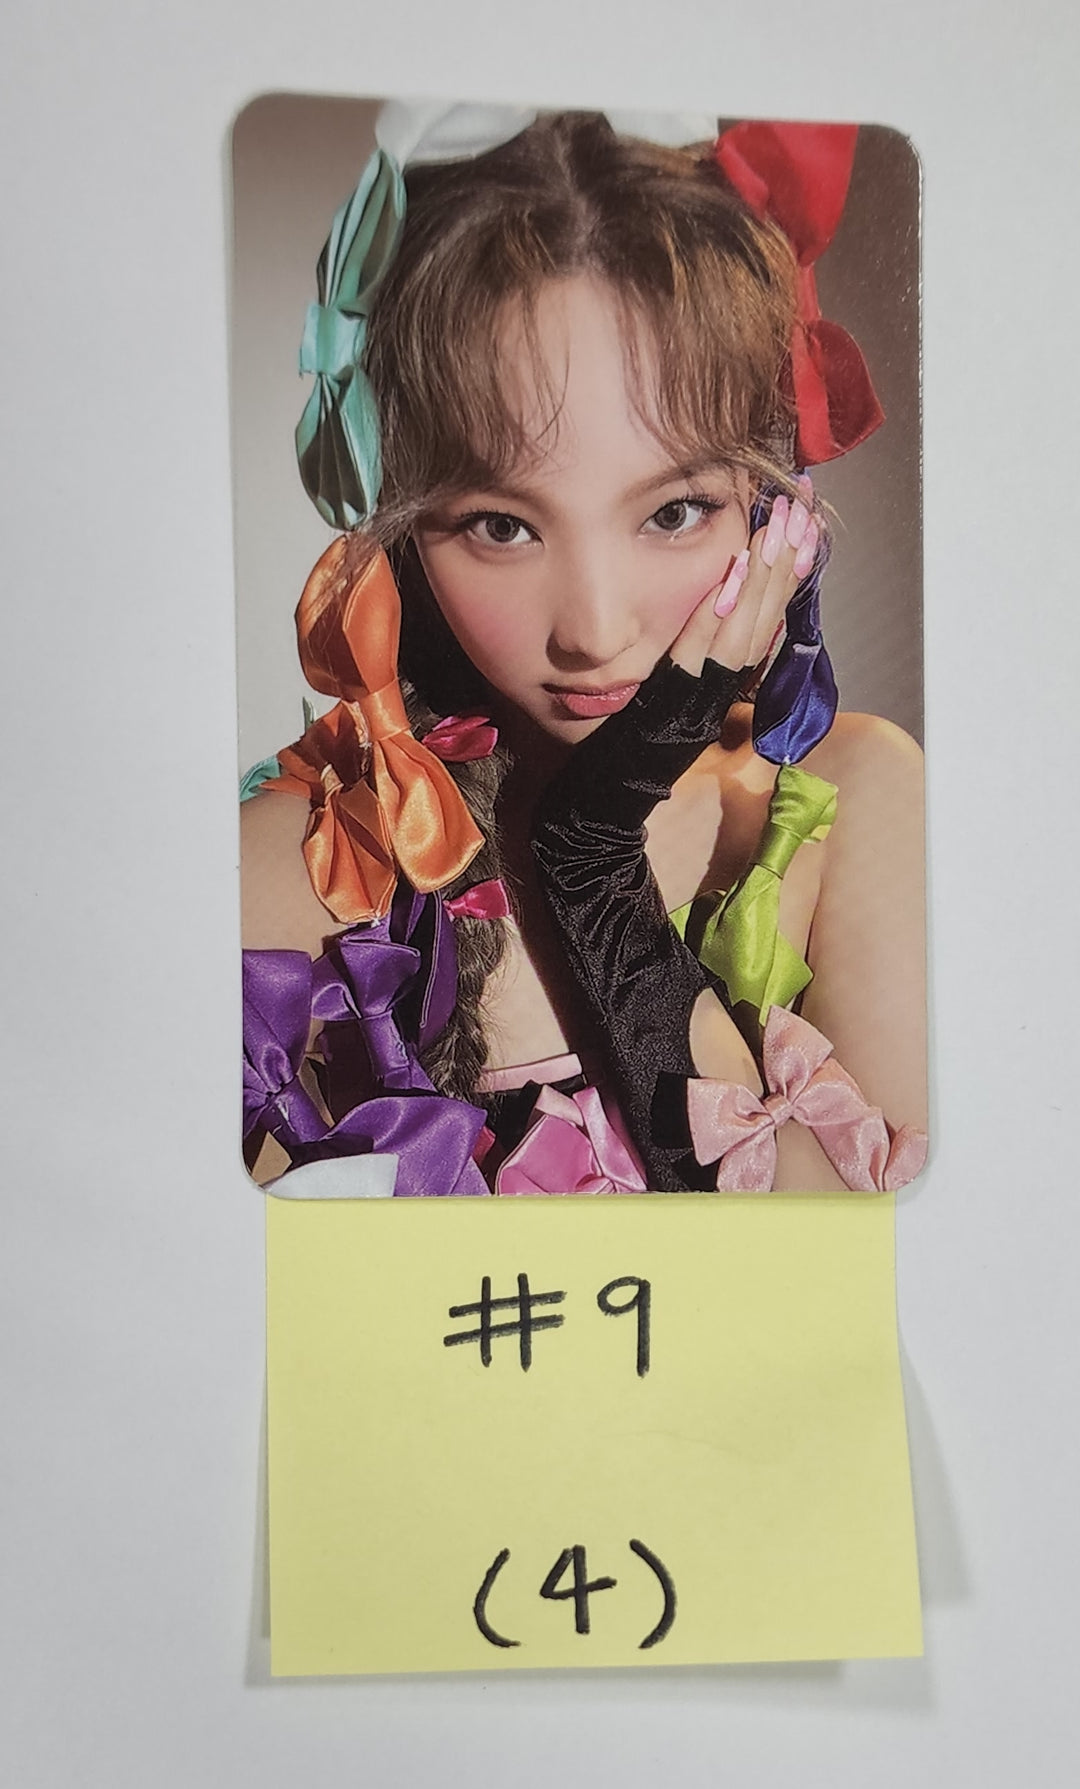 Nayeon "IM NAYEON" - Official Photocard, Business Card, Polaroid Photocard, Postcard (Updated 22.06.30)